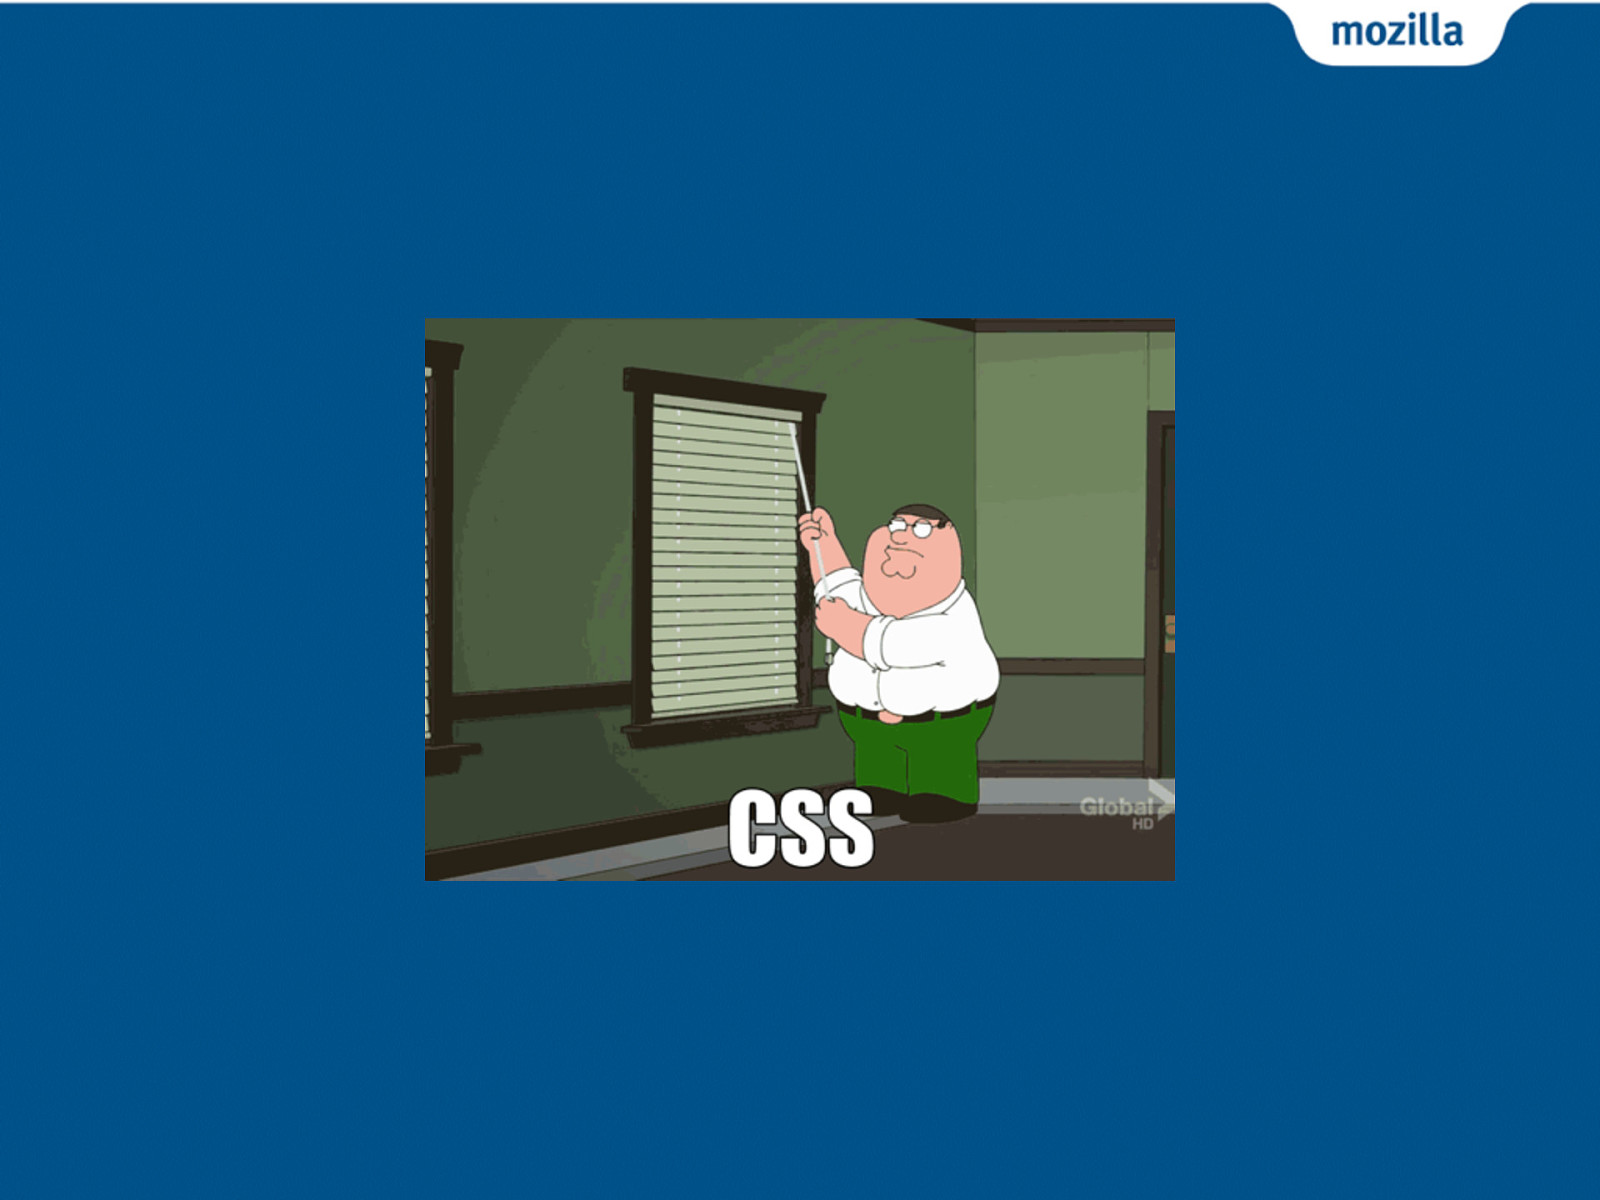 Debugging CSS